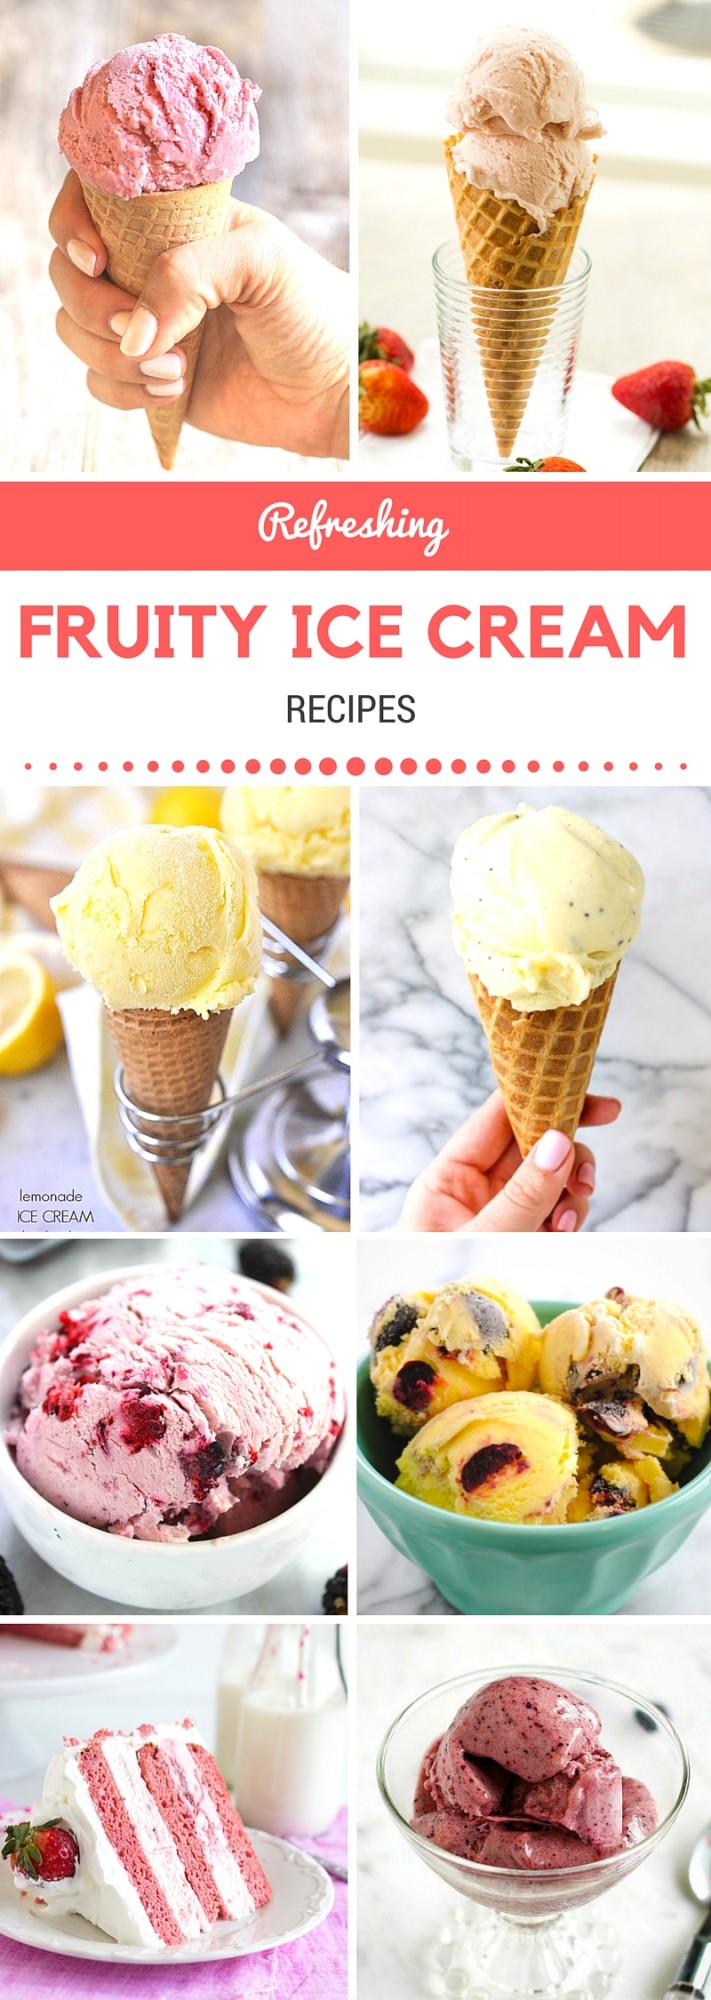 32 Refreshing Fruity Ice Cream Recipes Pinterest - No number